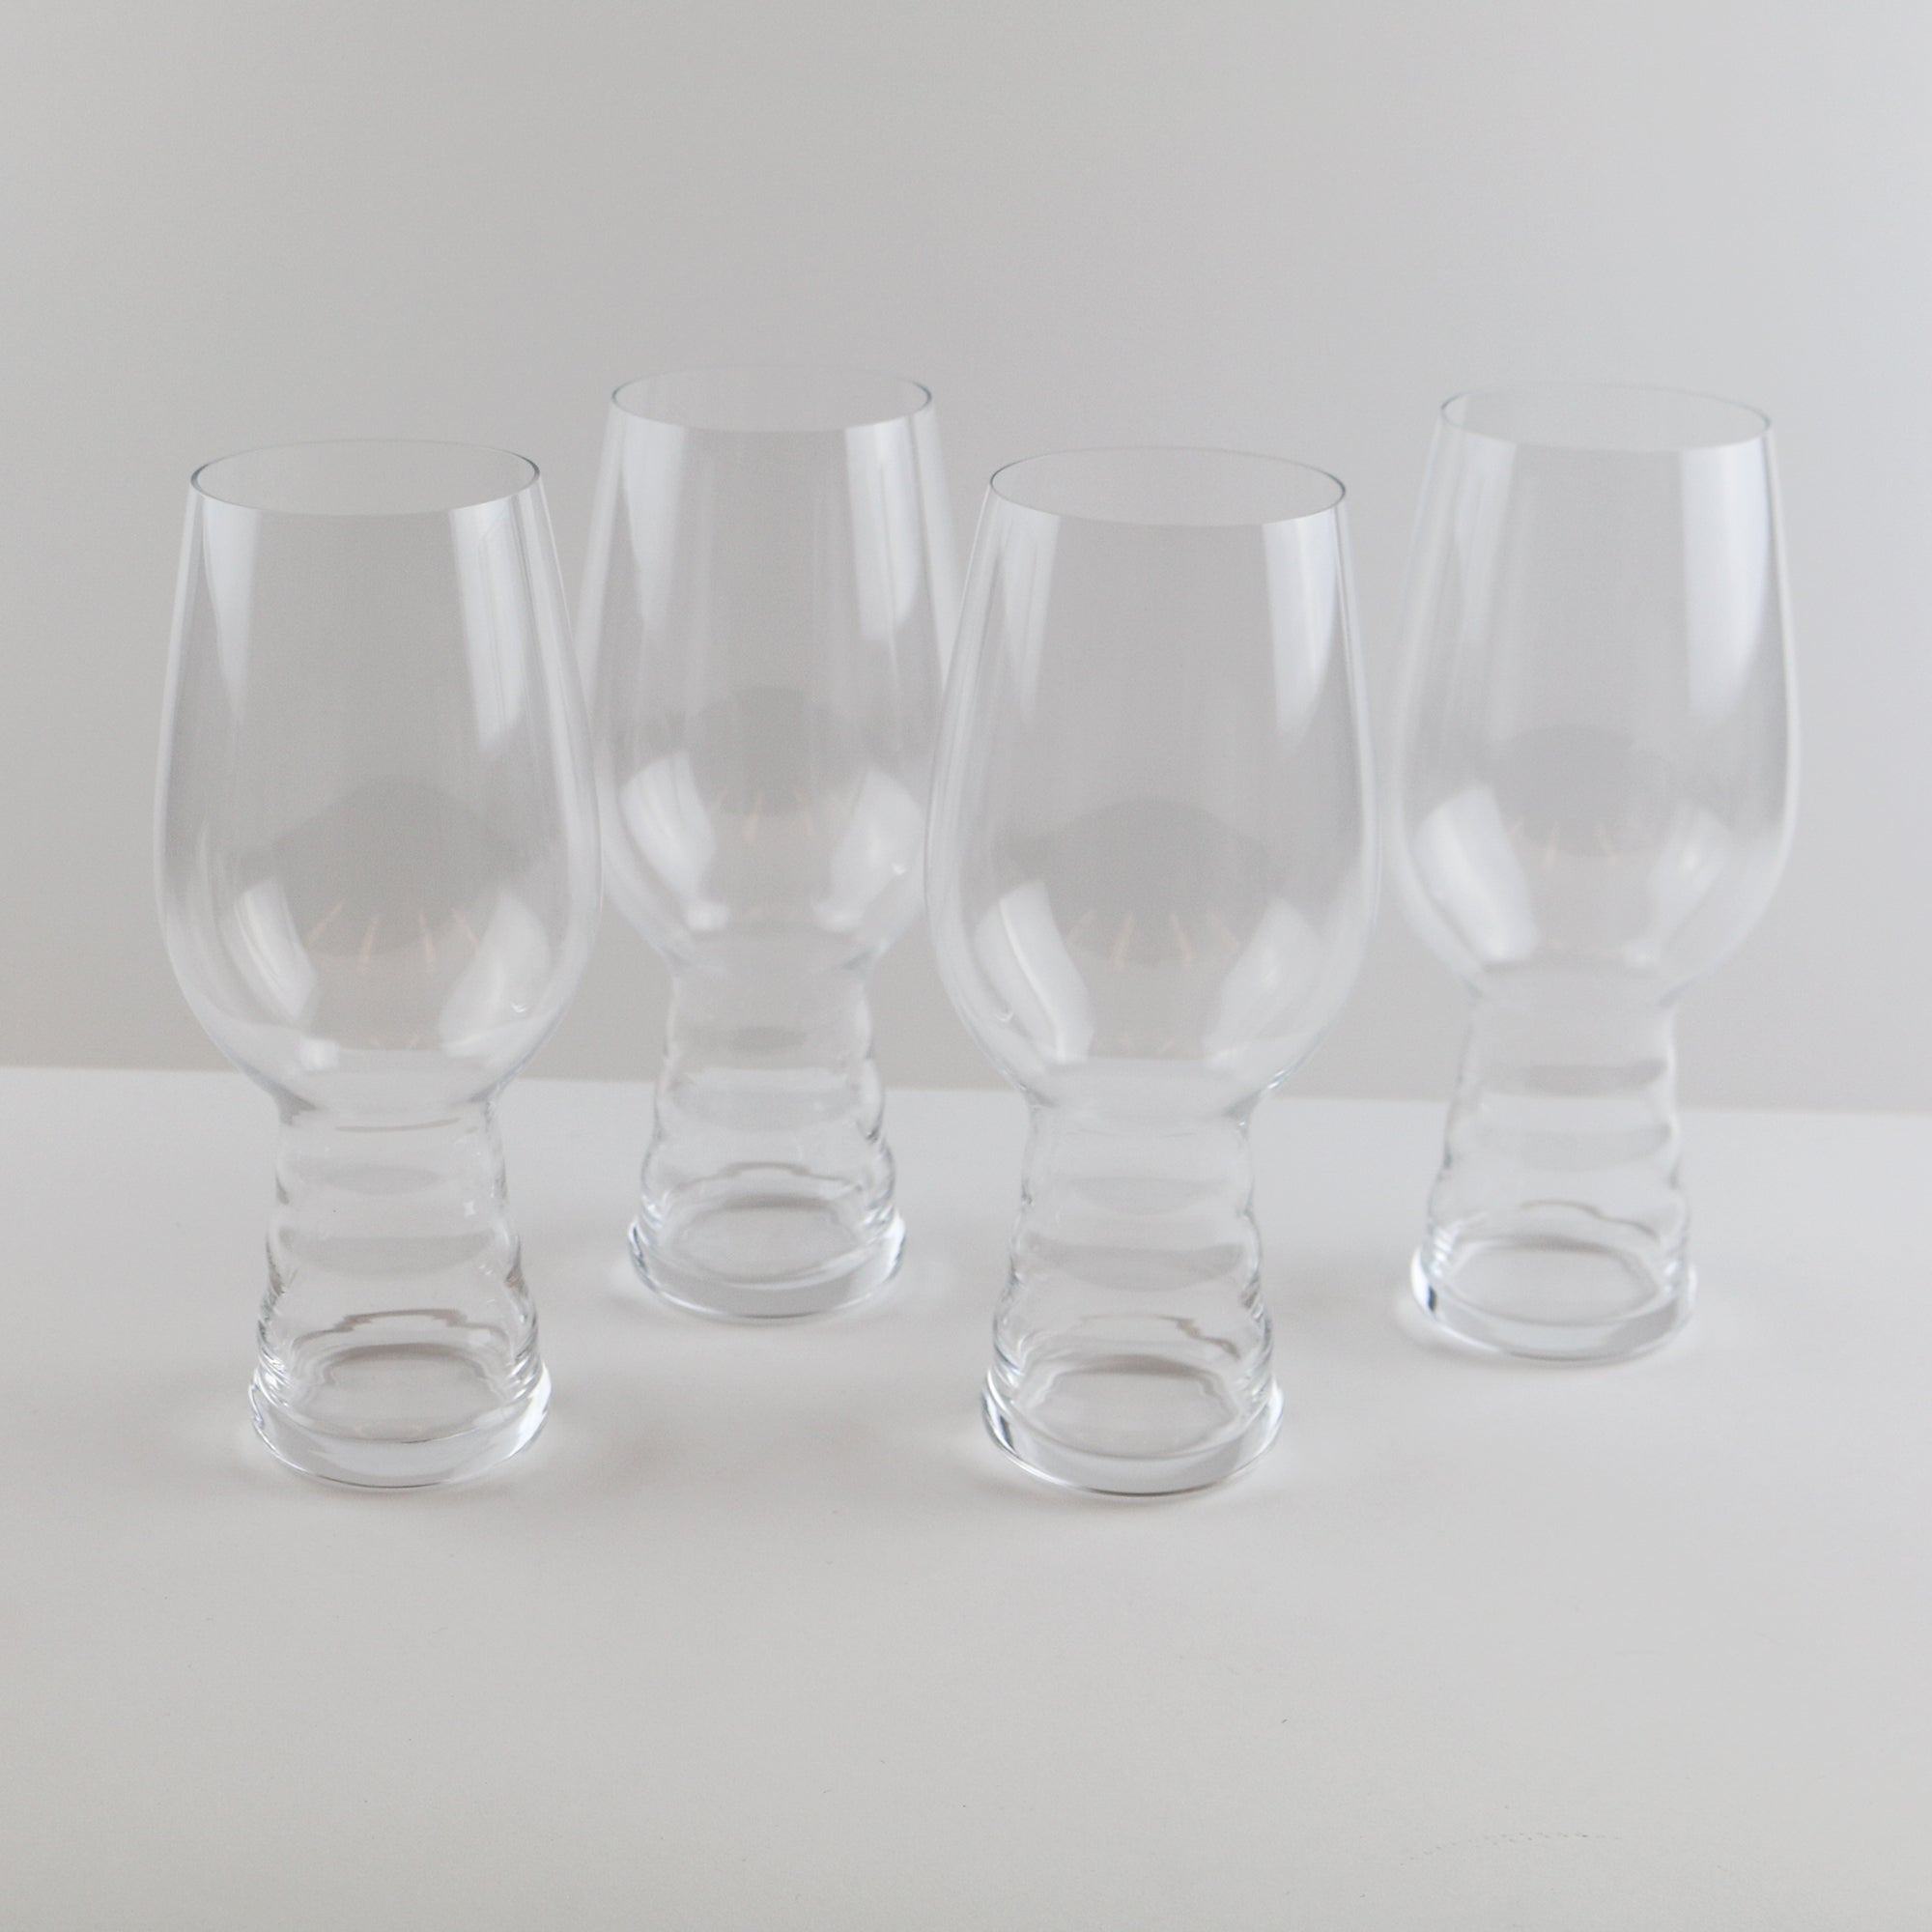 Spiegelau IPA Craft Beer Glasses - 19.1 oz - 2 Pack - Designed